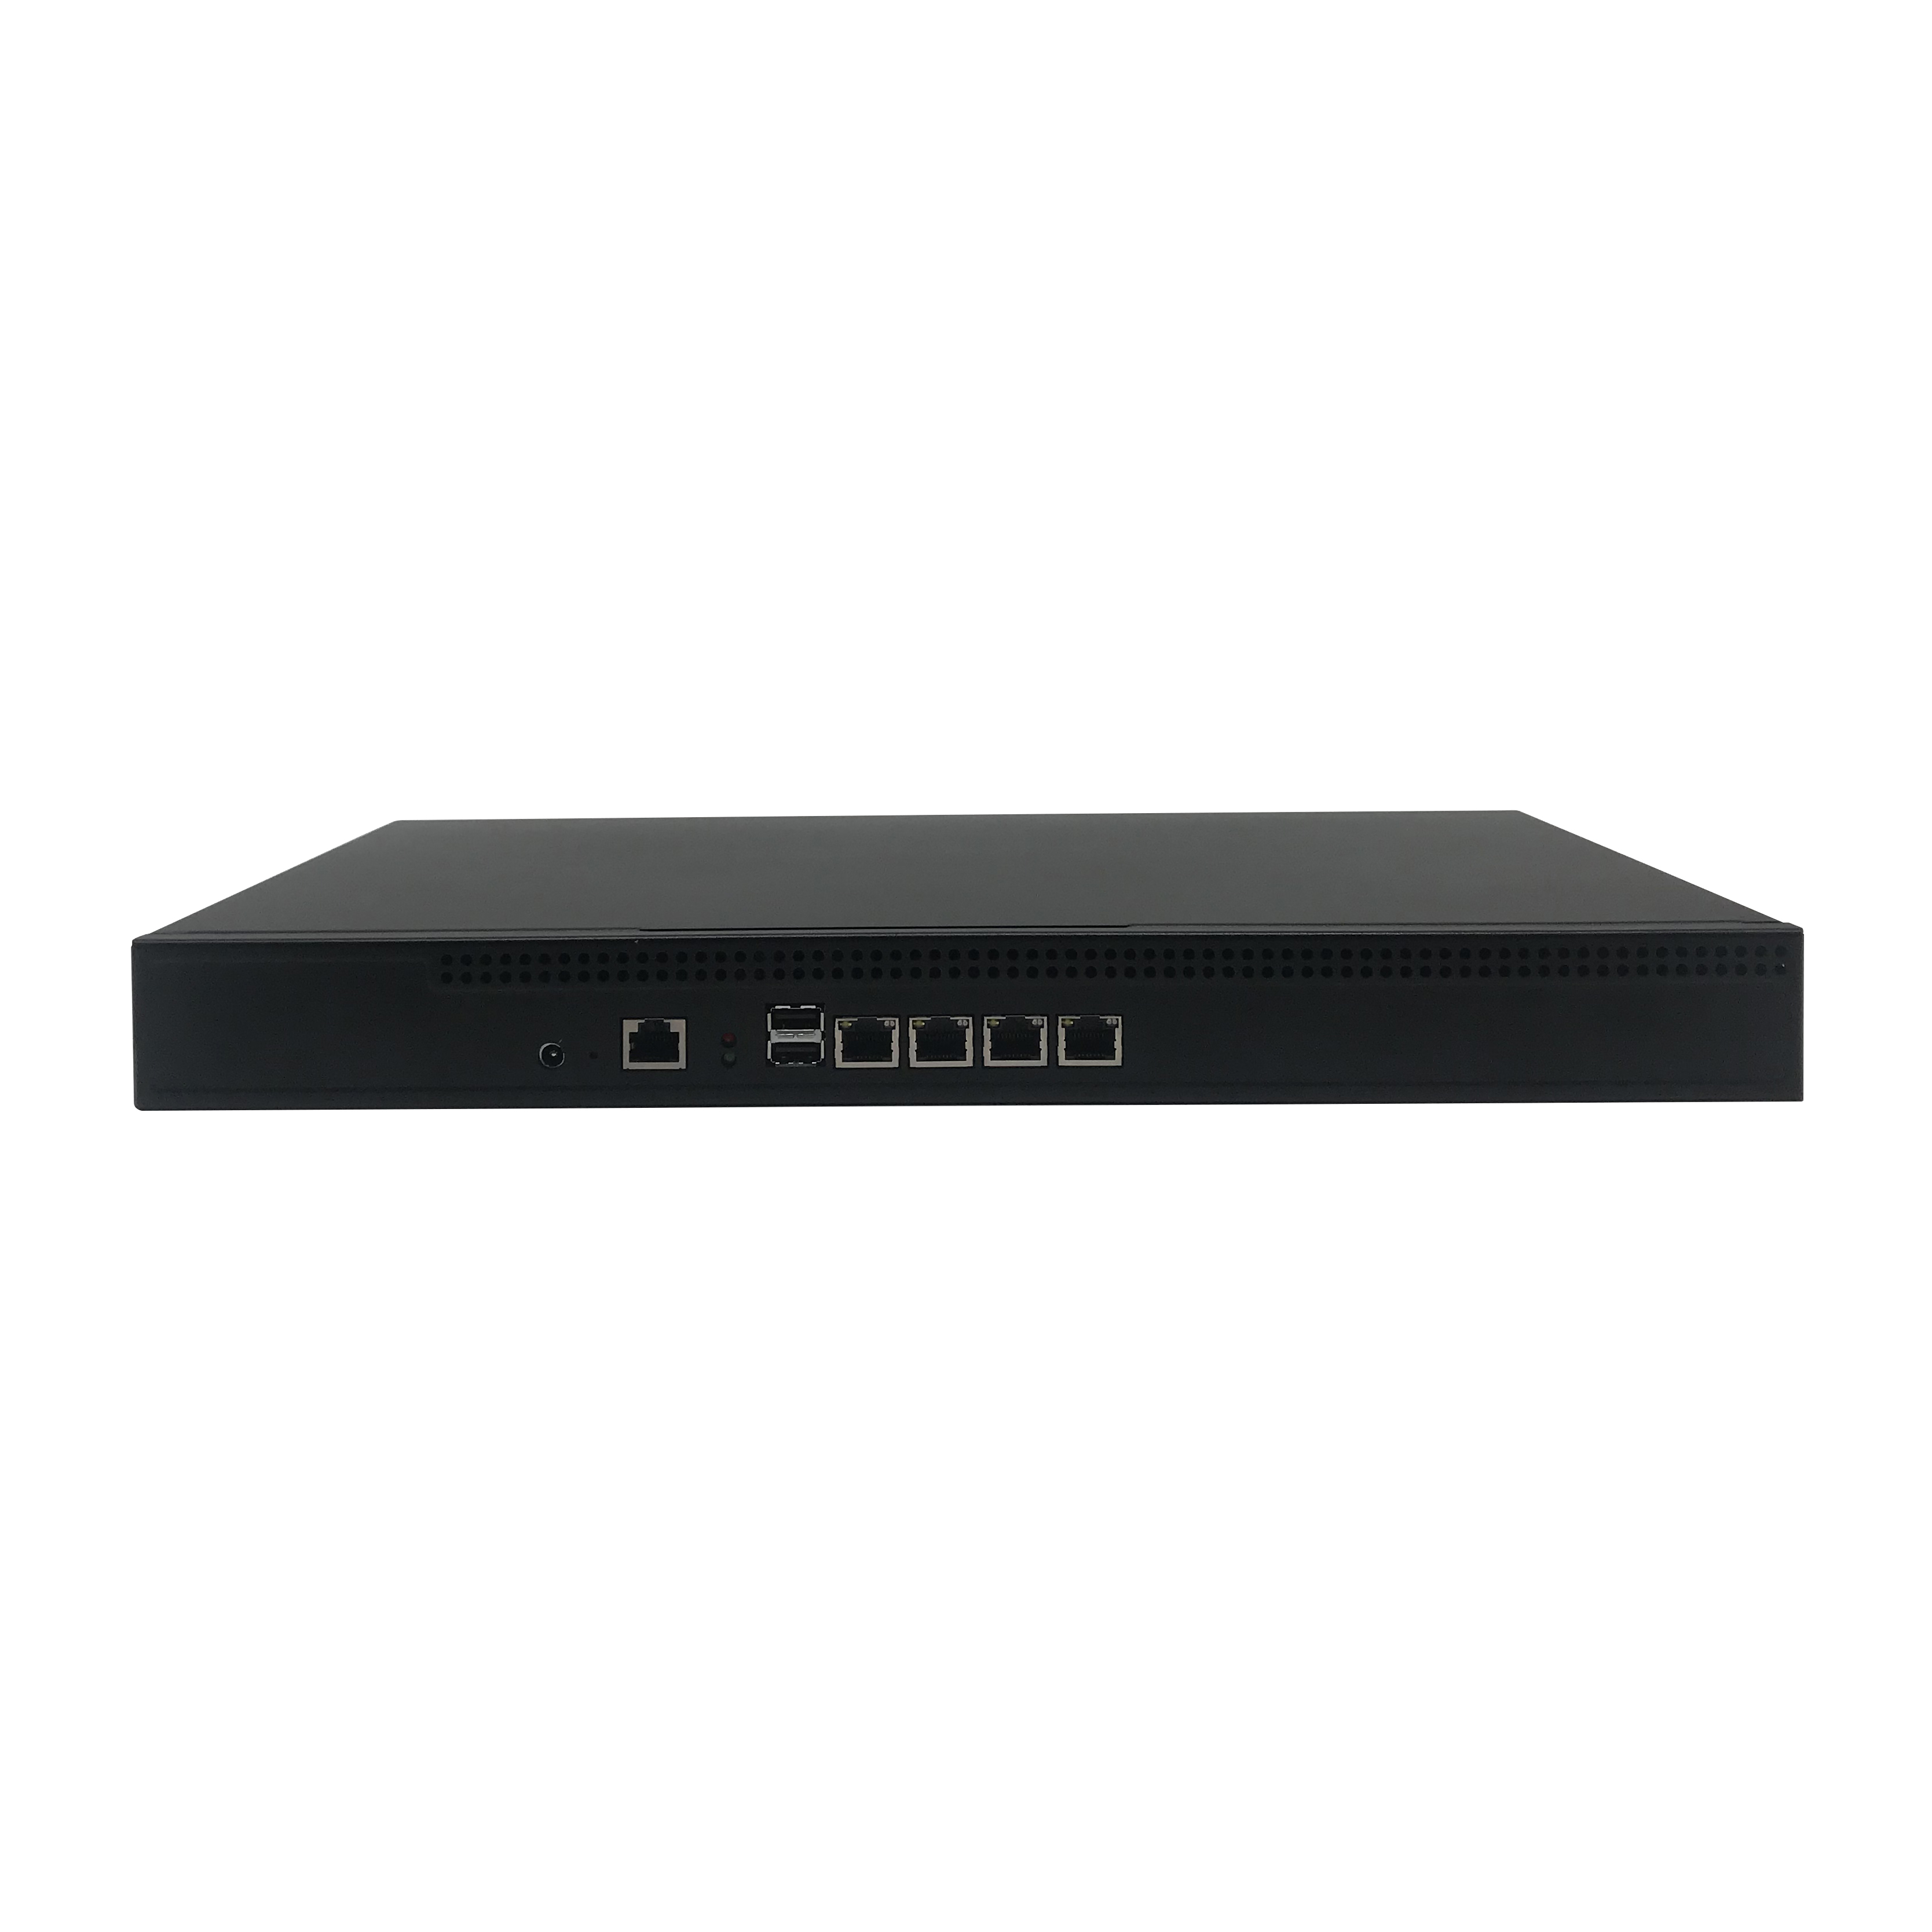 the best firewall hardware products 1U Rackmount 4 LAN Network Appliance Celeron J1900 Quad Core top internet network security